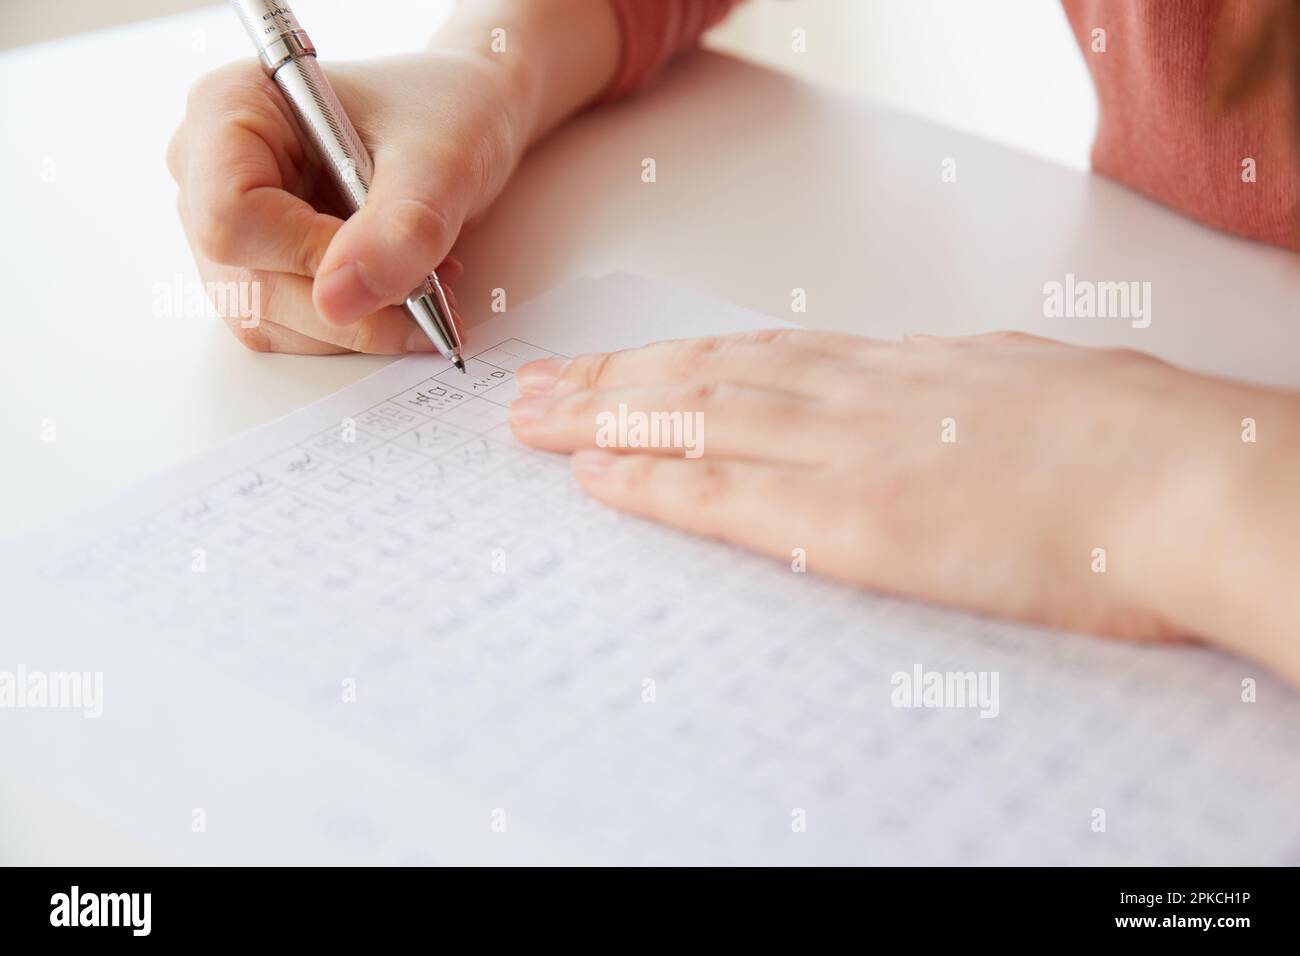 Woman's hand writing Kanji characters on white desk Stock Photo